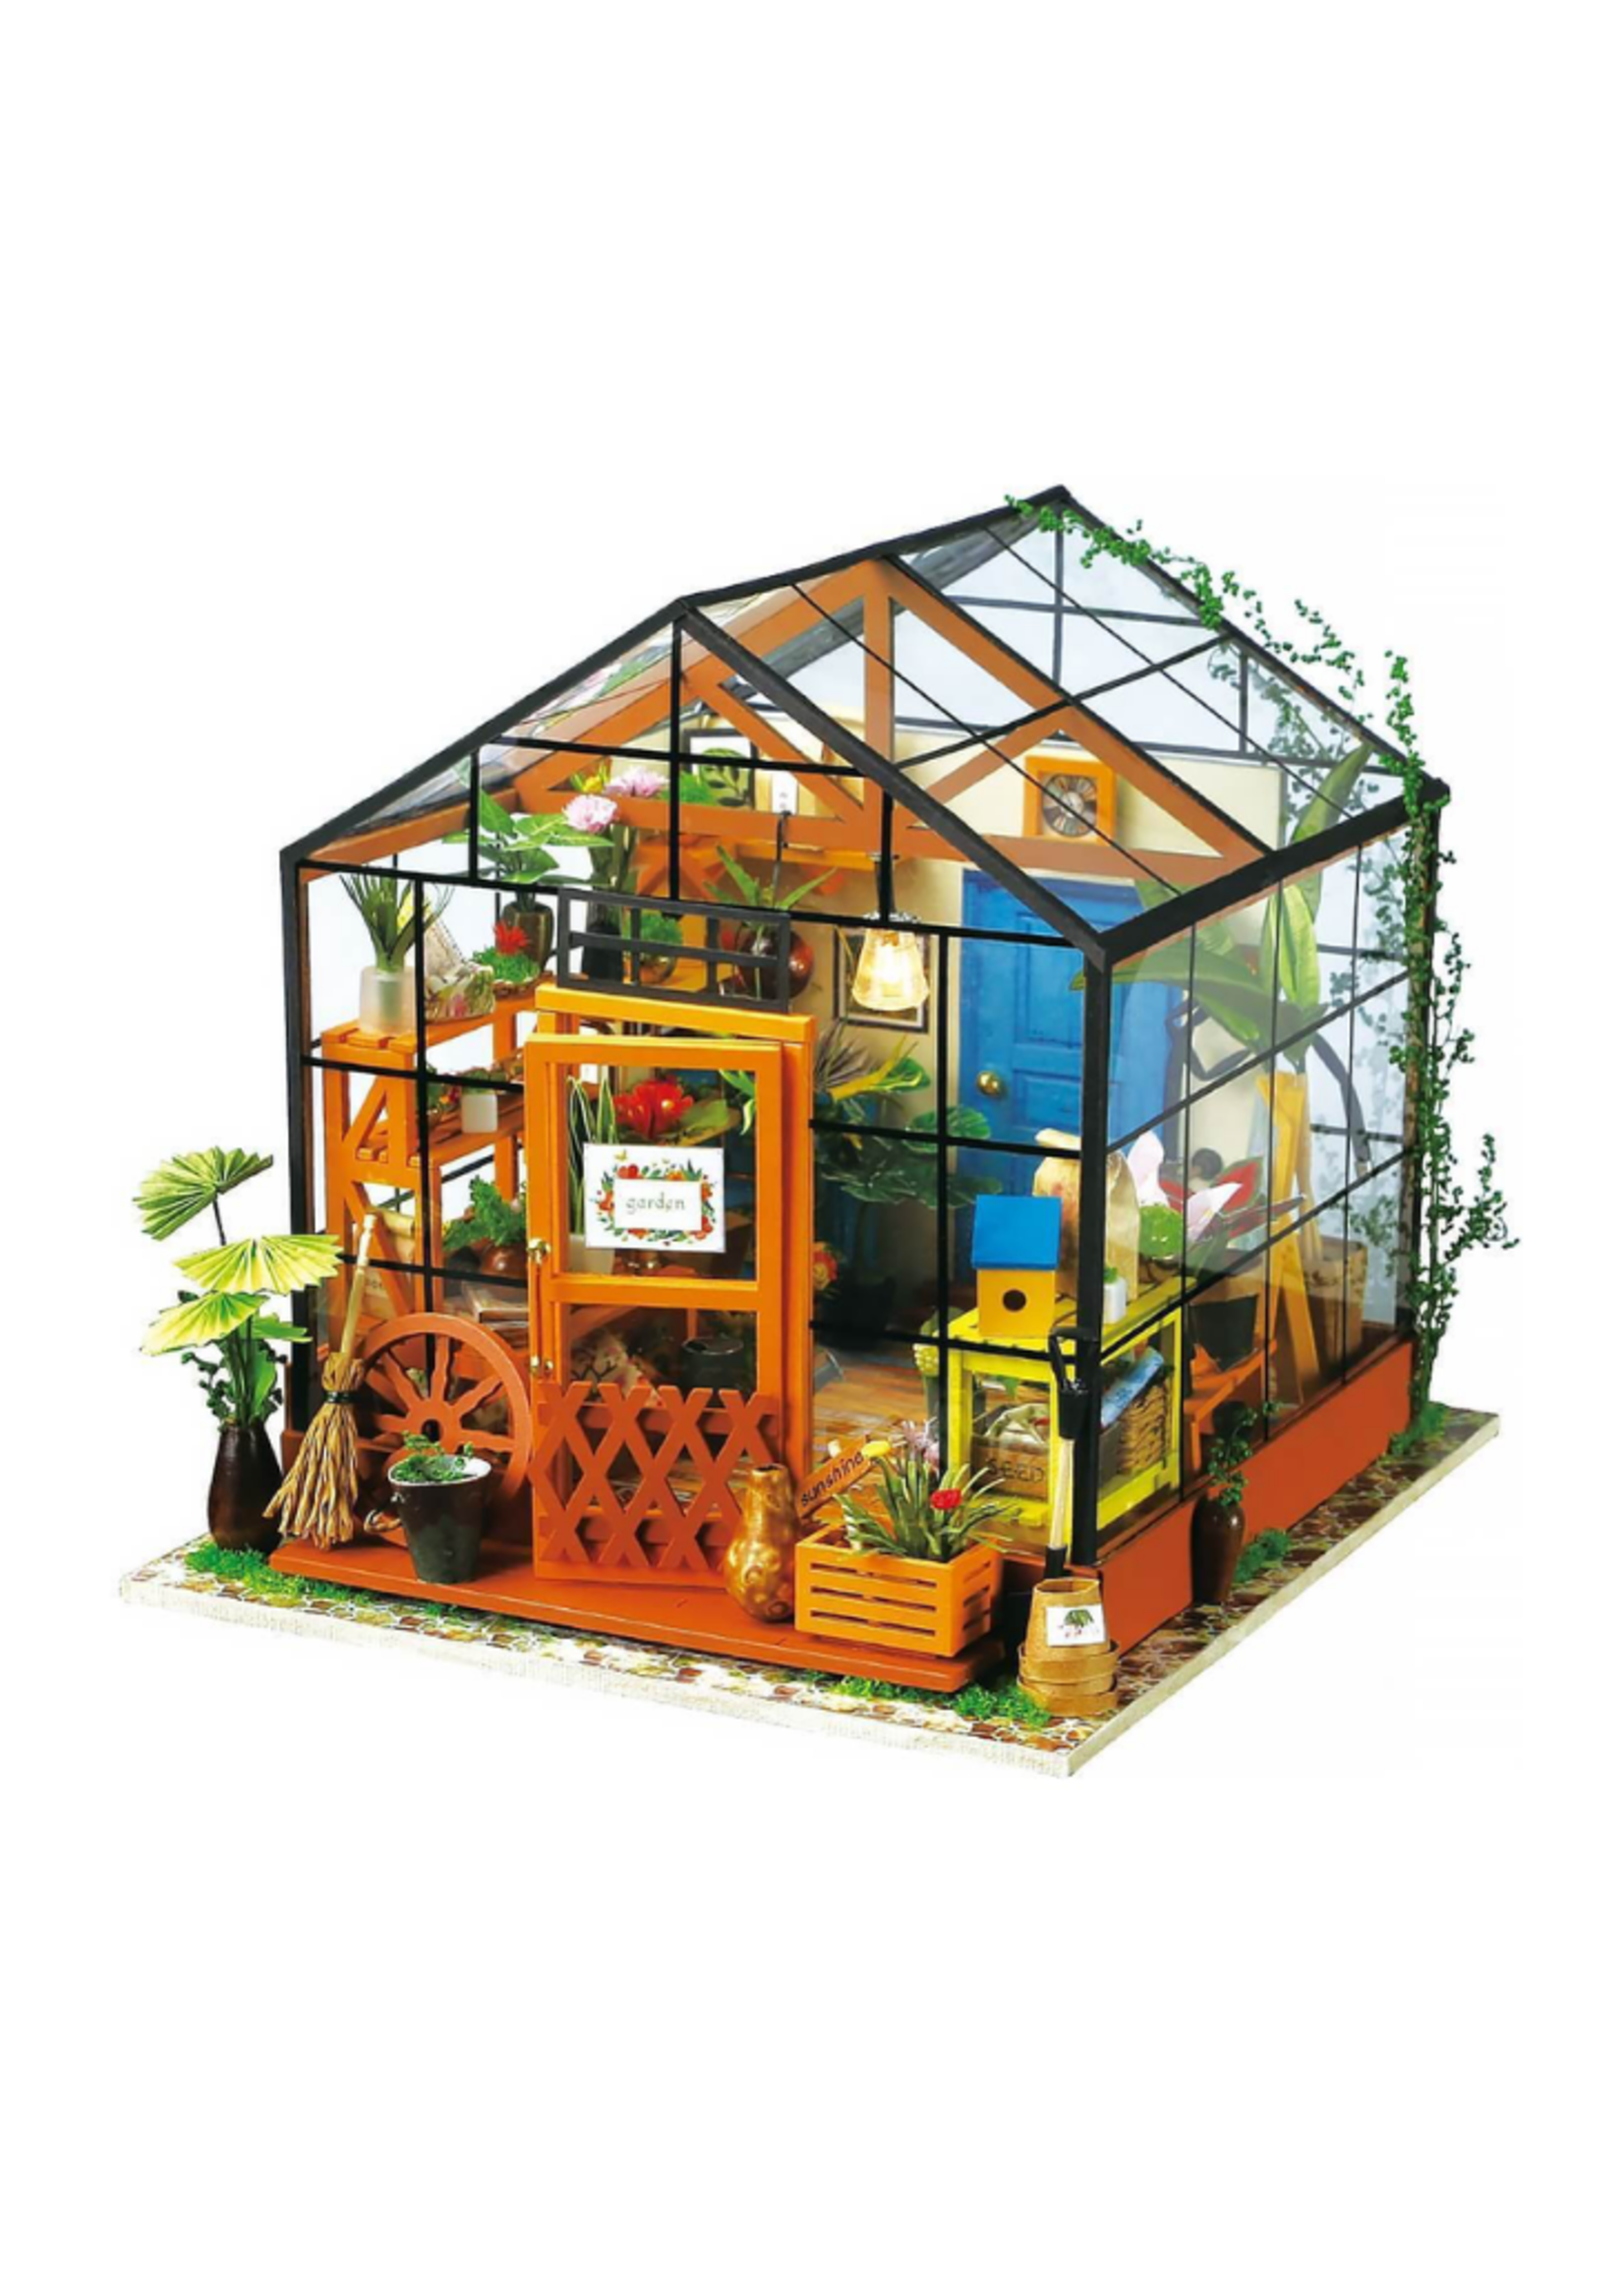 DIY Dollhouse Miniature House Kit - Dora's Loft - Hands Craft